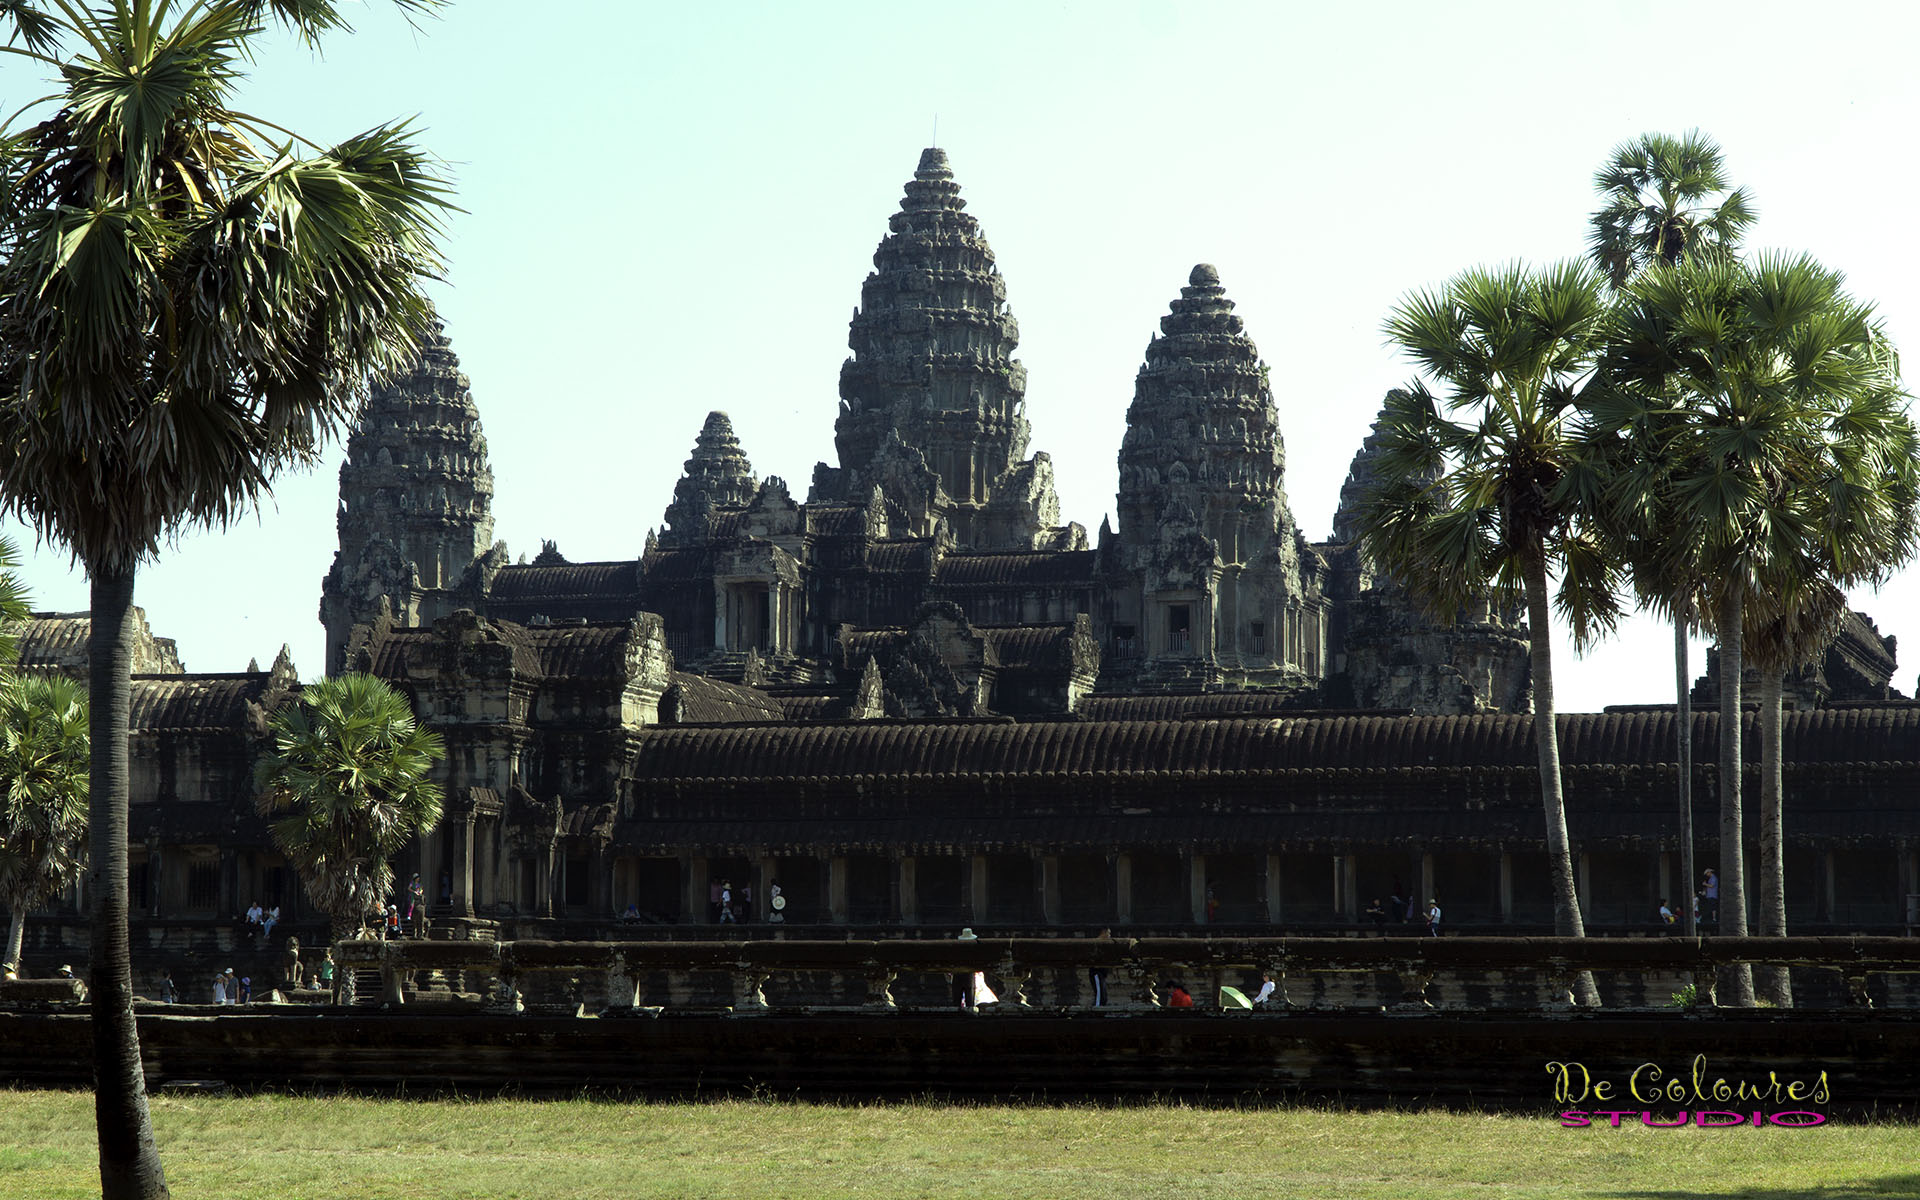 Ankor Wat, Cambodia